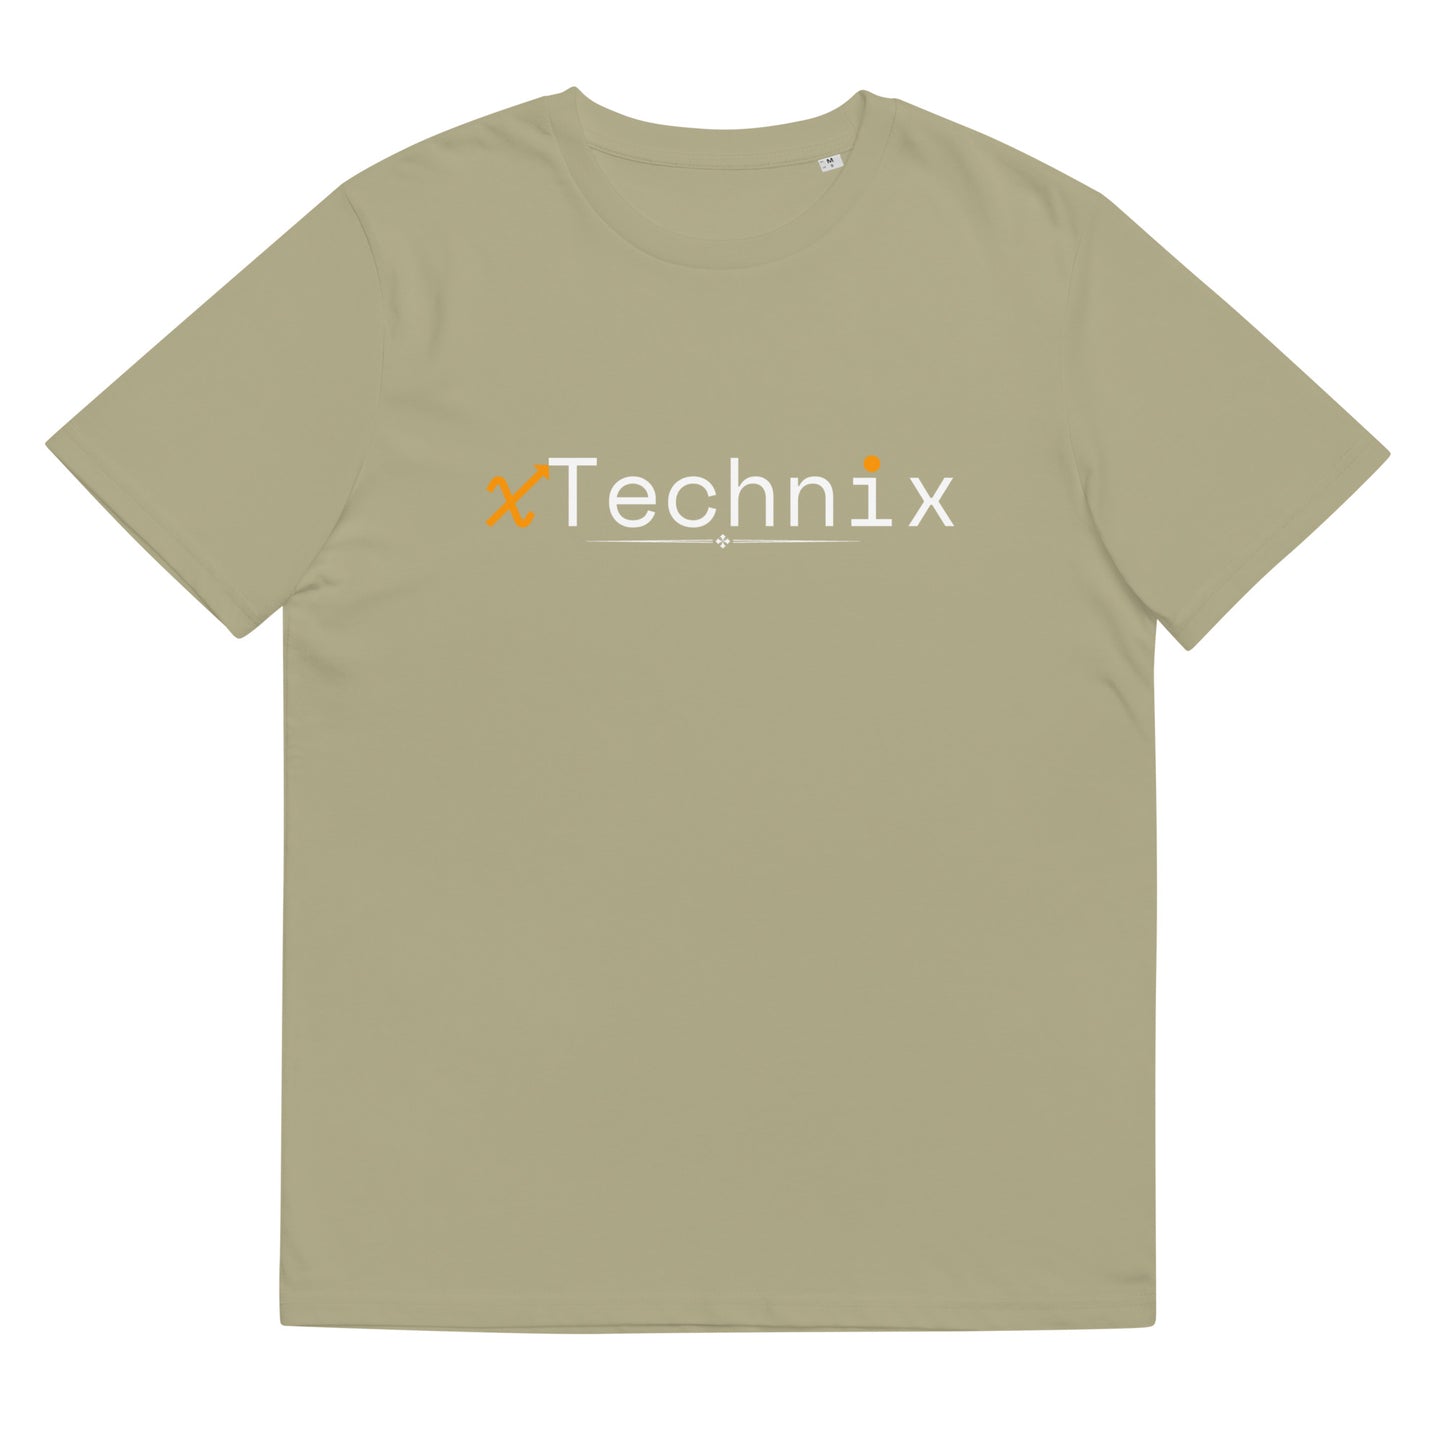 xTechnix Unisex organic cotton t-shirt